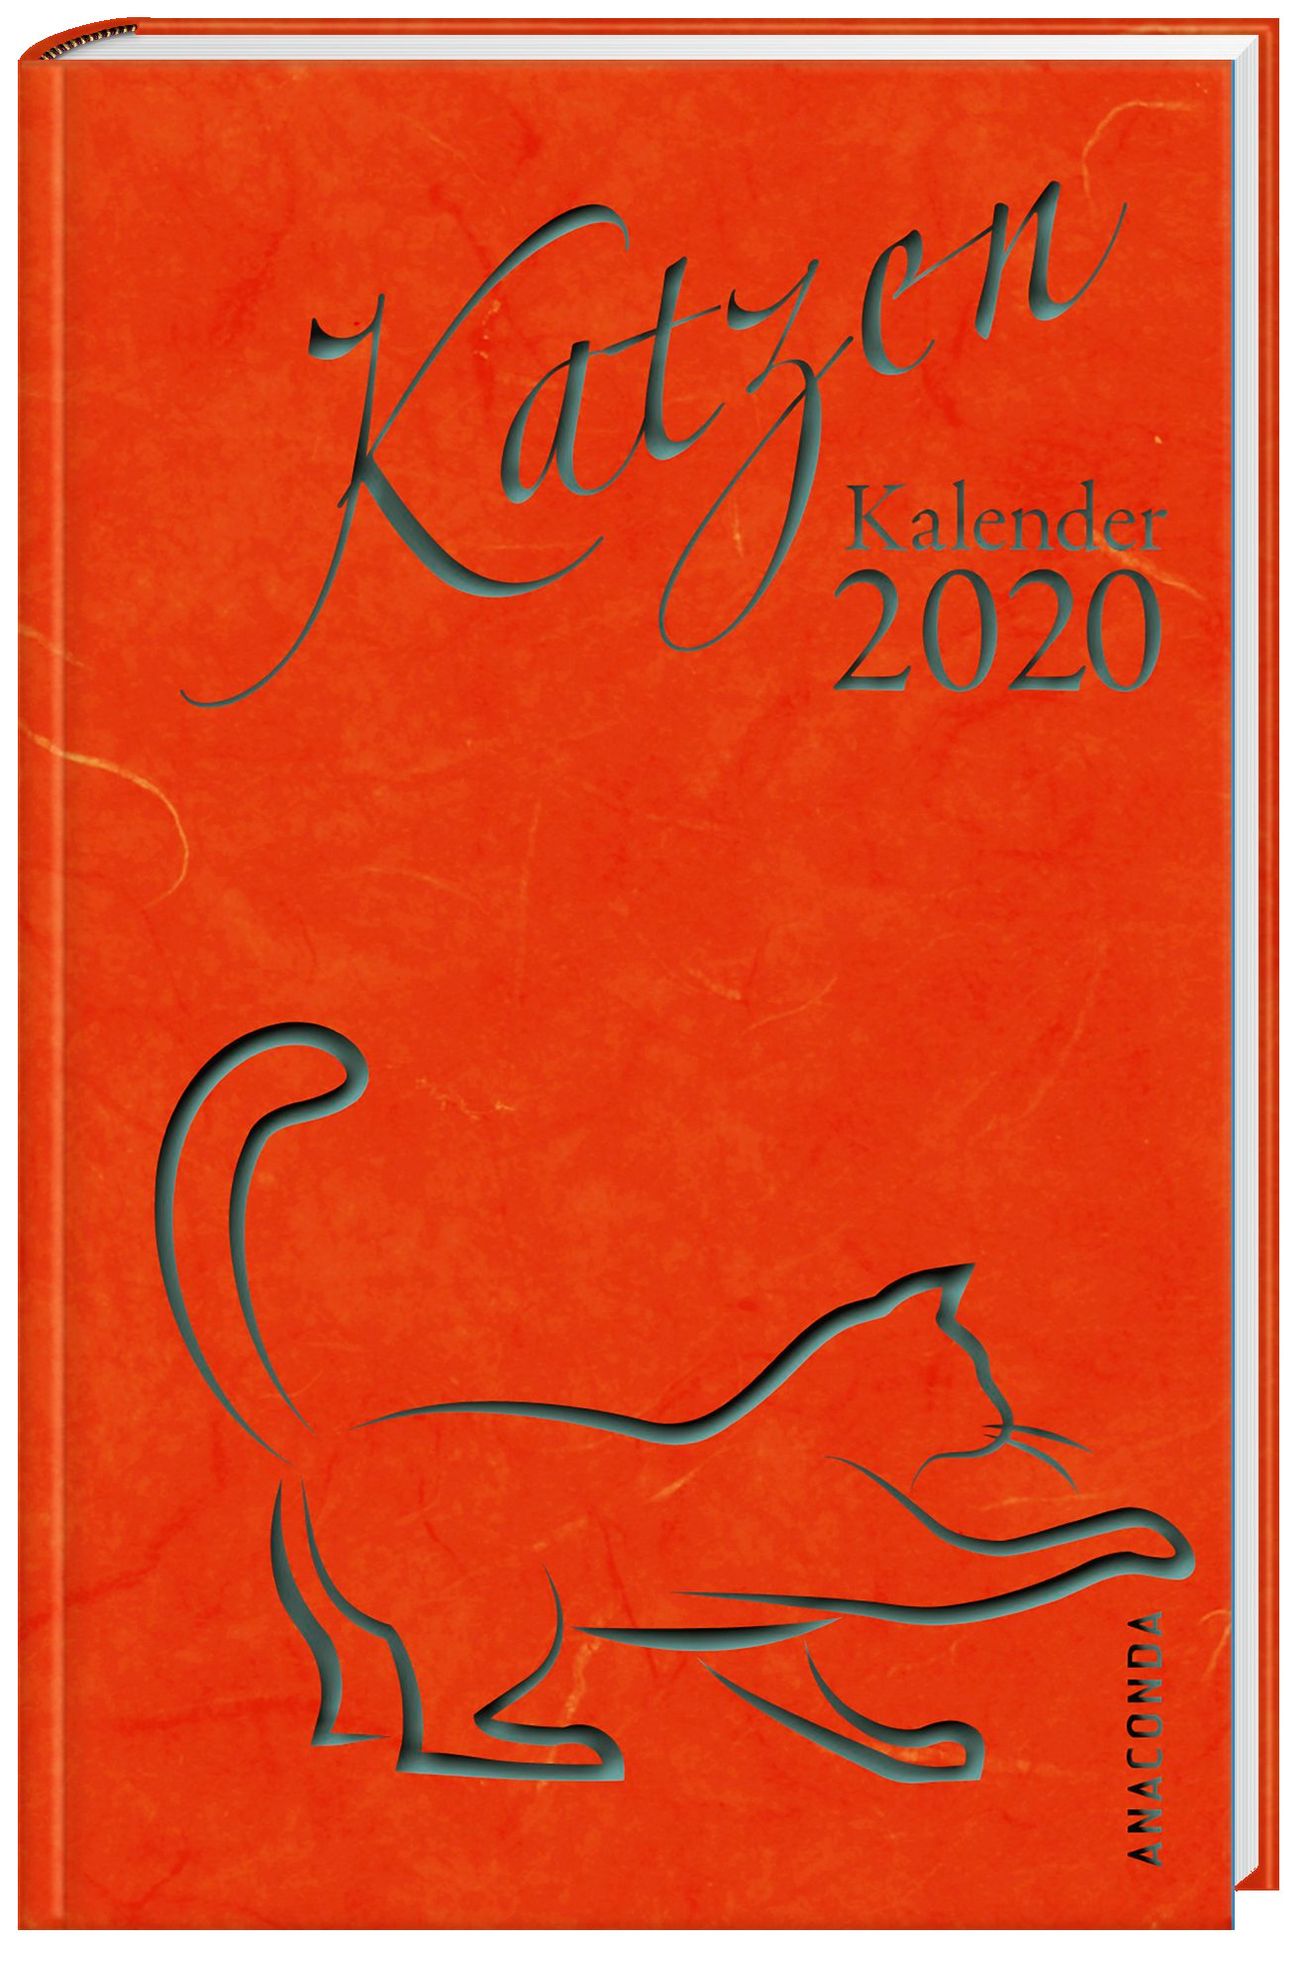 Katzen Kalender 2020 - Kalender günstig bei Weltbild.de bestellen